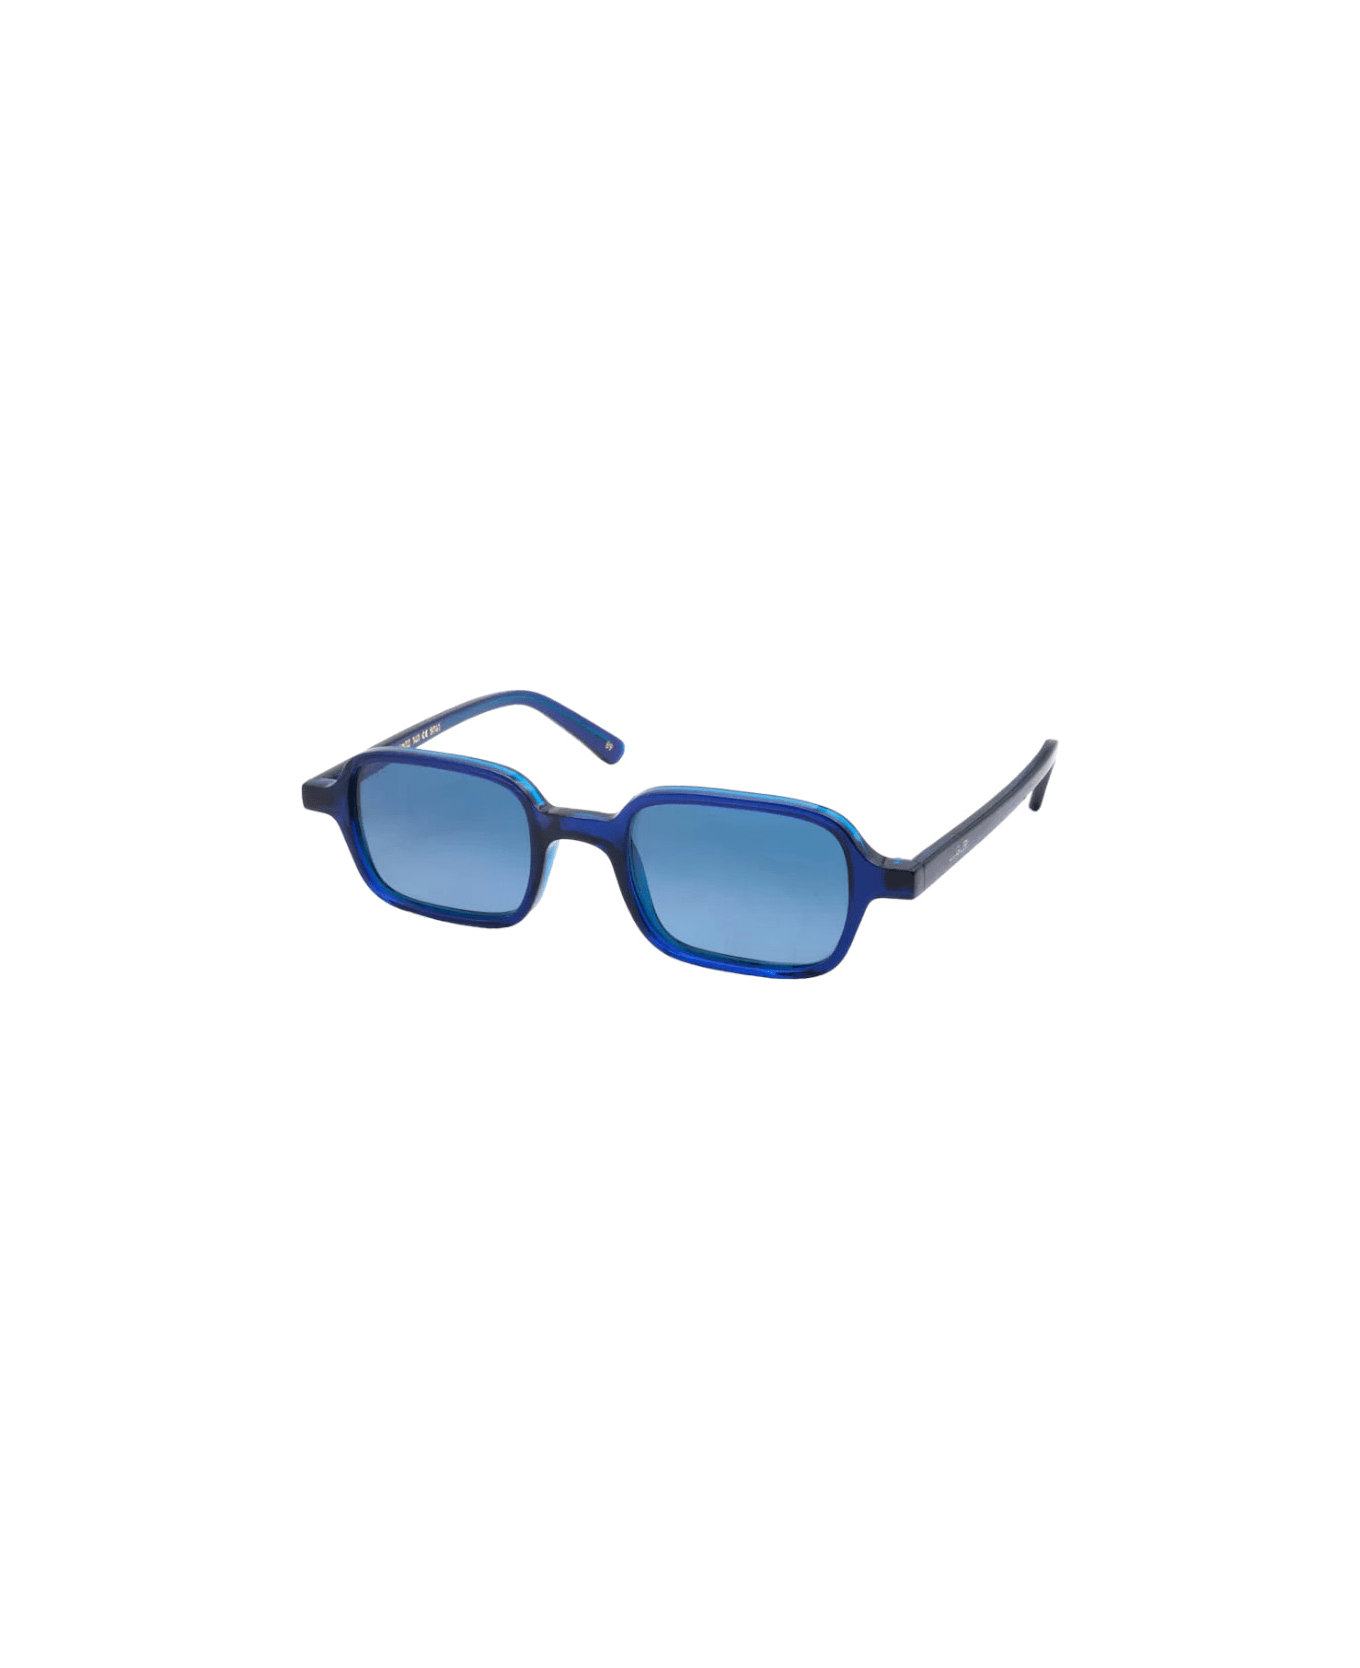 L.G.R. Marrackech Sunglasses